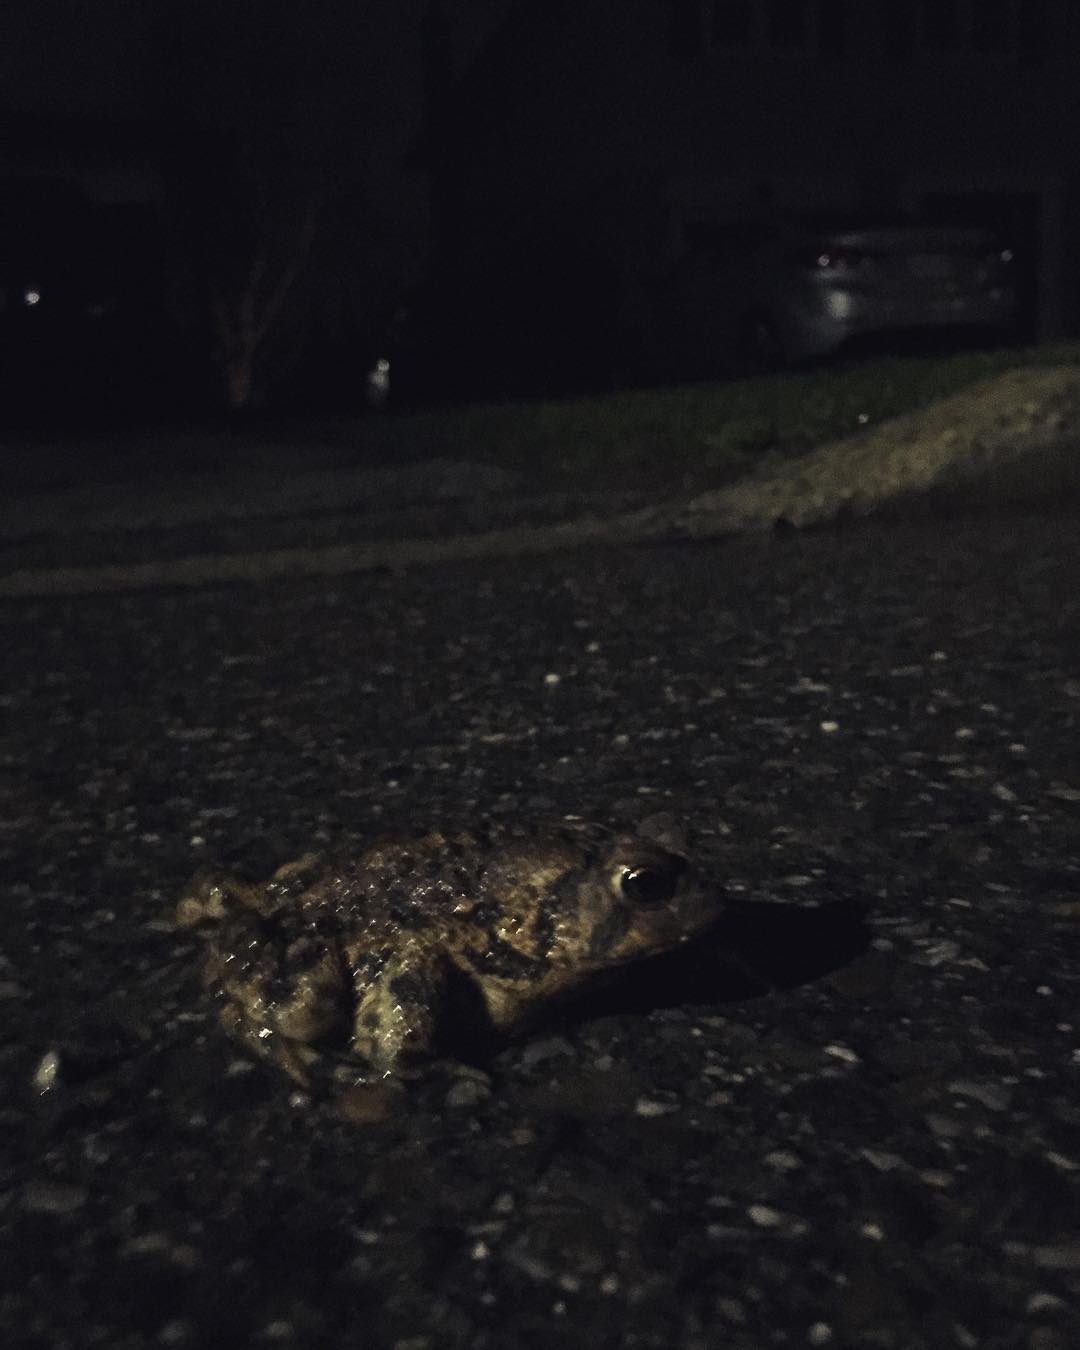 Road Toad, Camo'd (Mr. Toad's Wild Hide)